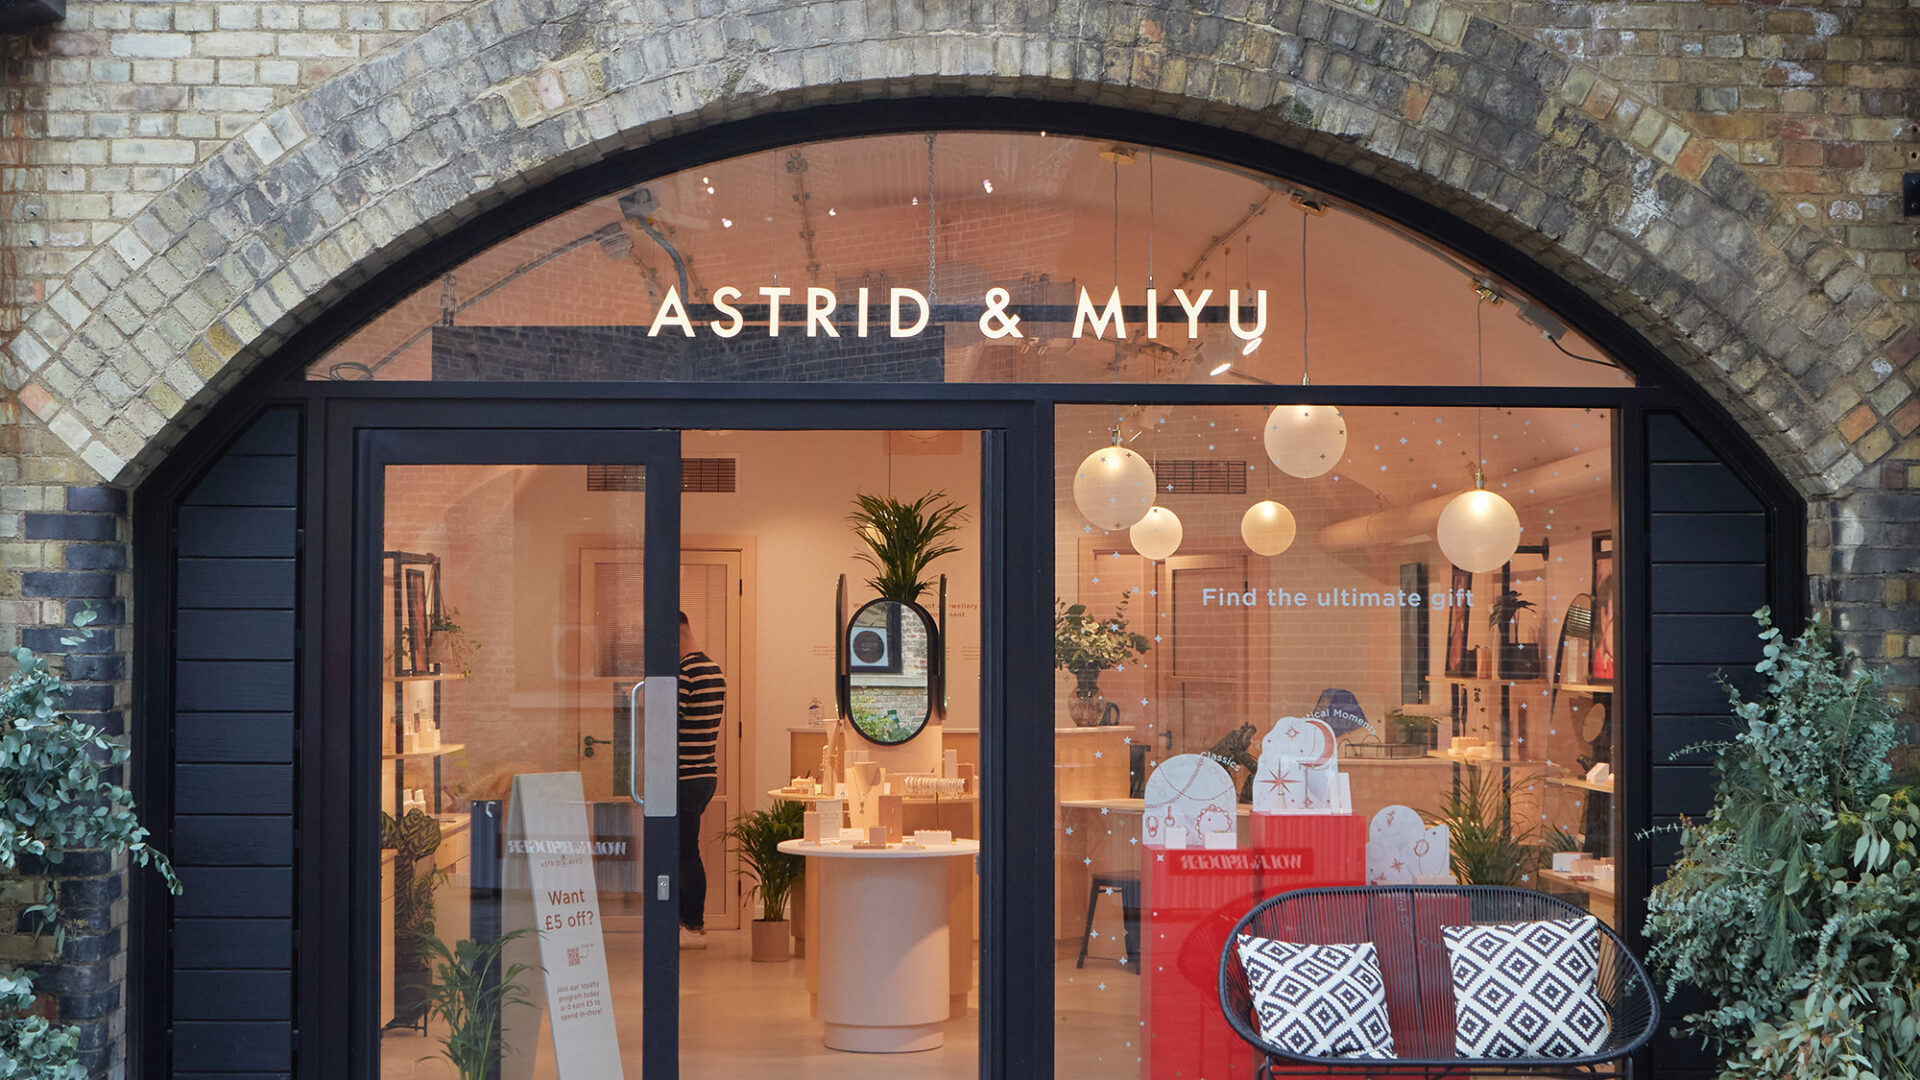 Astrid & Miyu Review: An In-Depth Astrid & Miyu Review | Legitreviewed